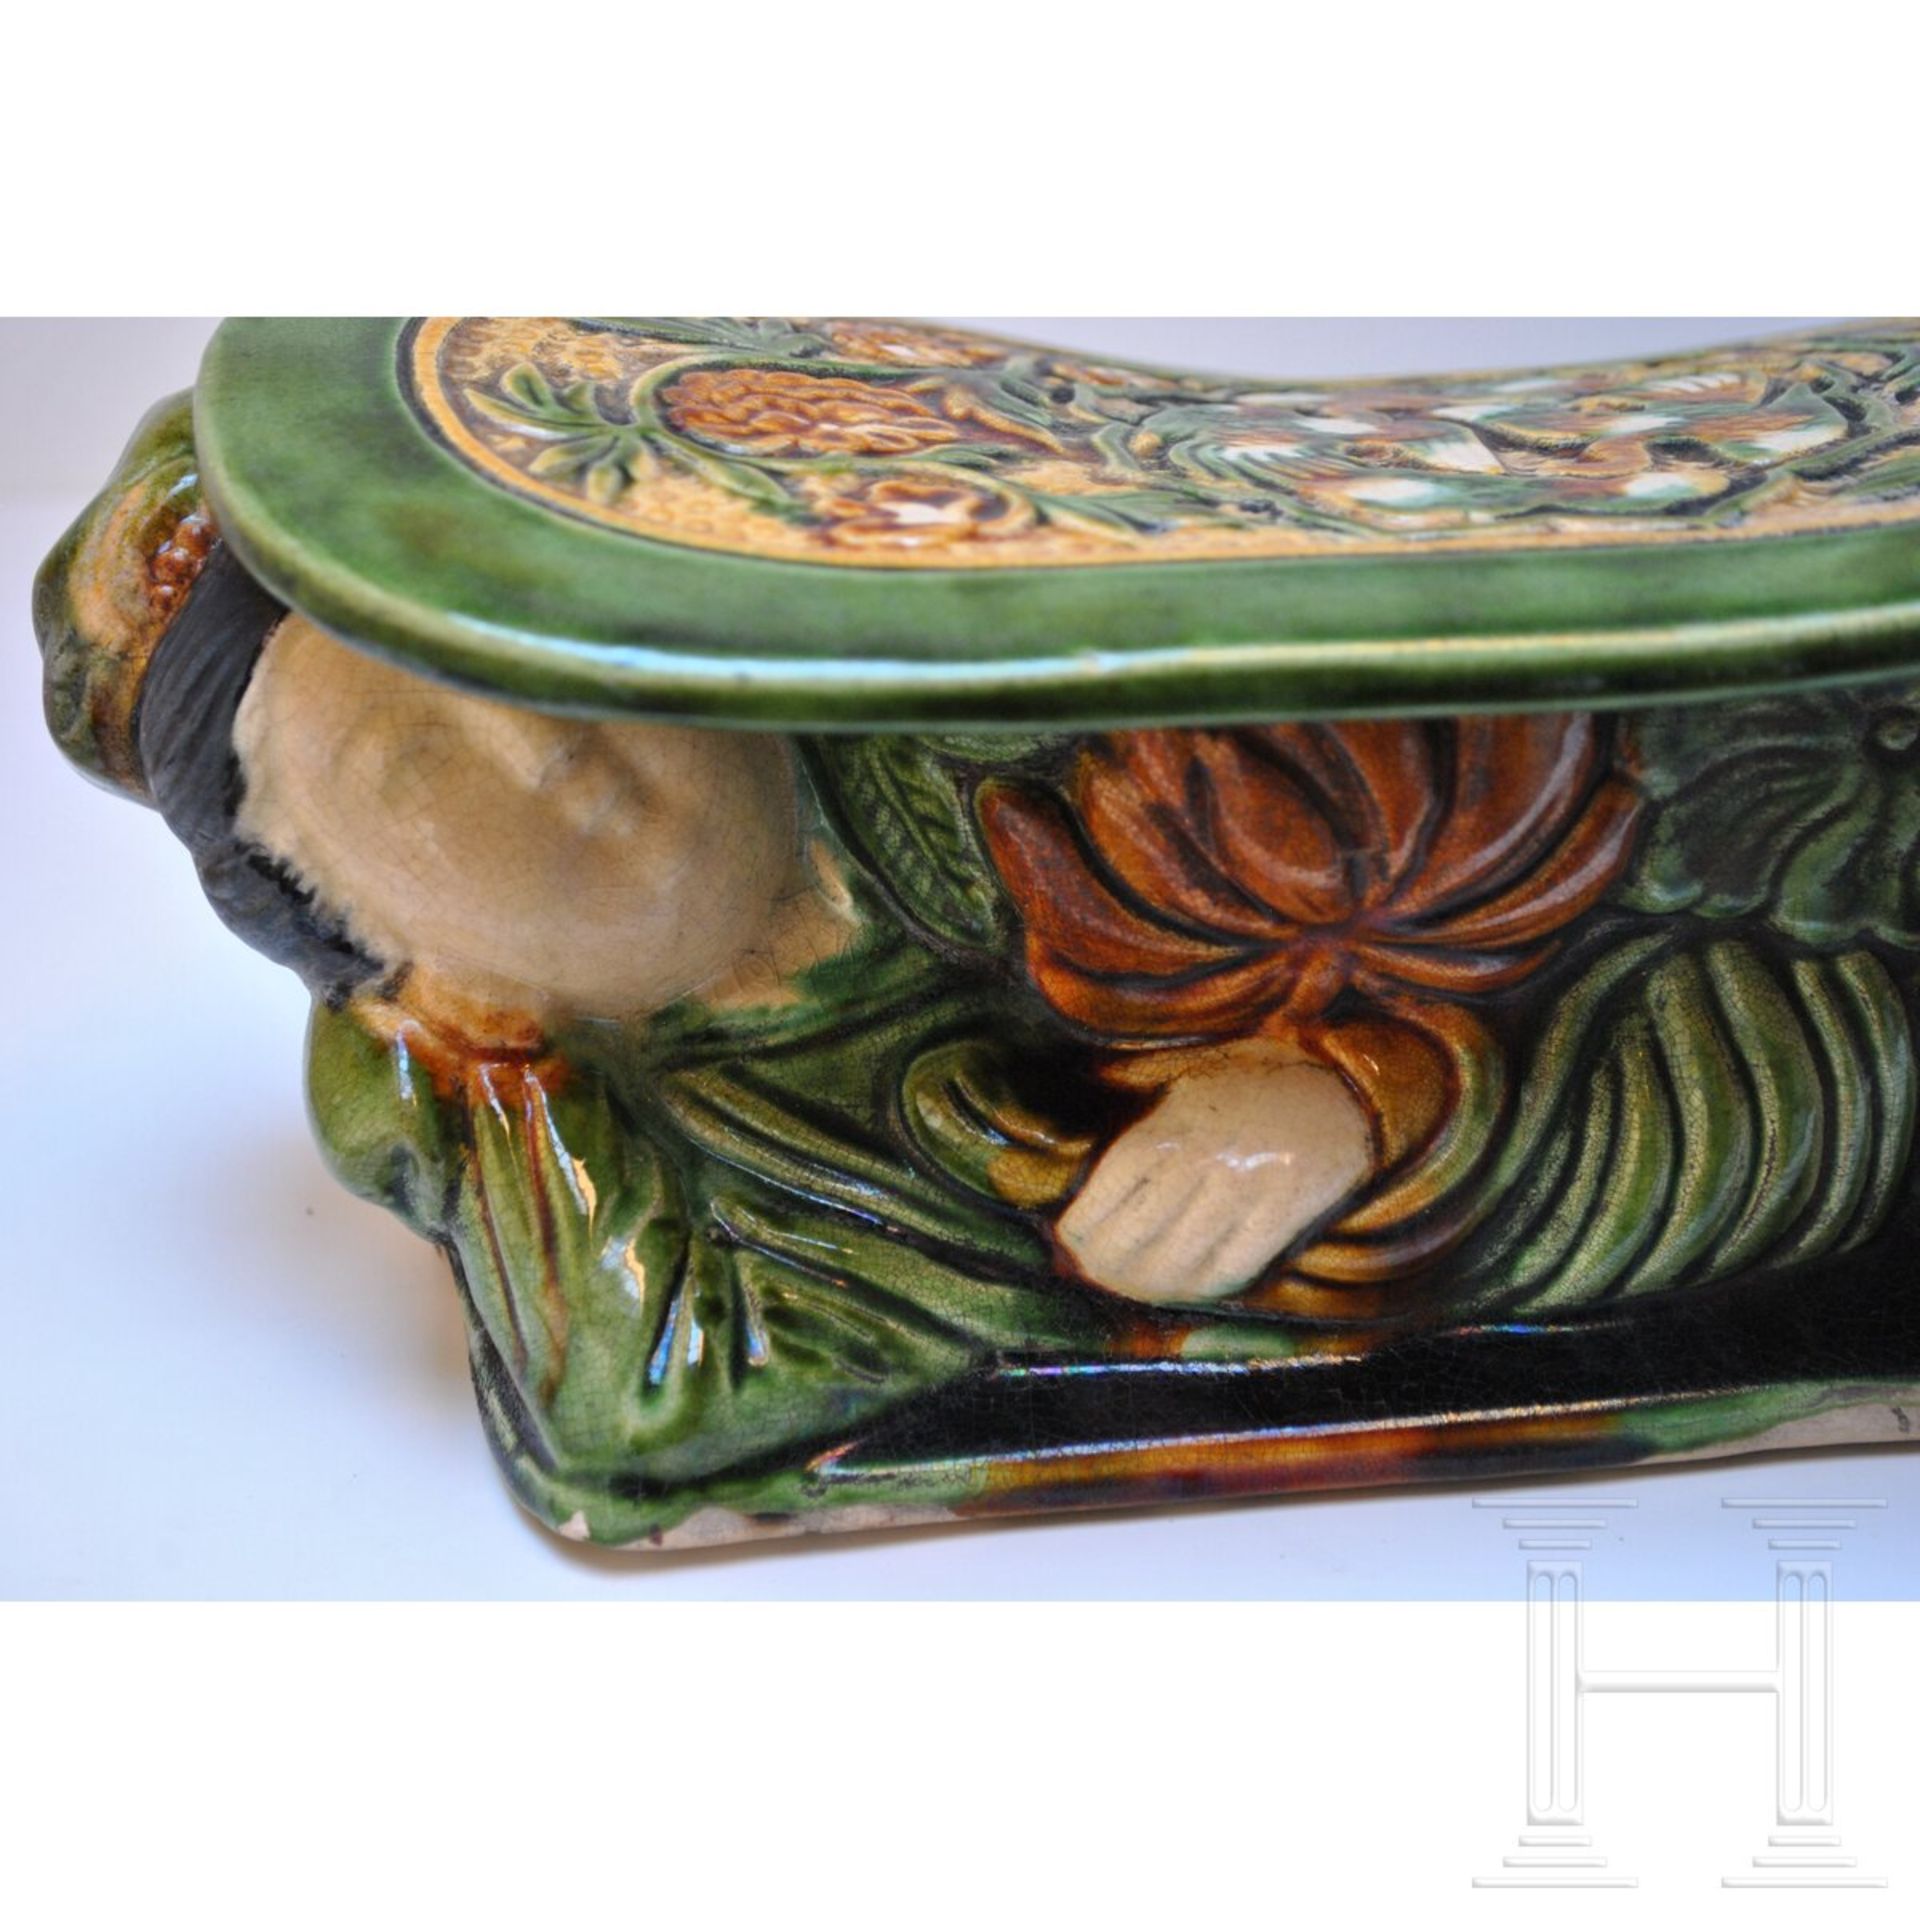 Sancai-glasiertes Keramik-Kissen, China, wohl 19./20. Jhdt. - Image 5 of 14